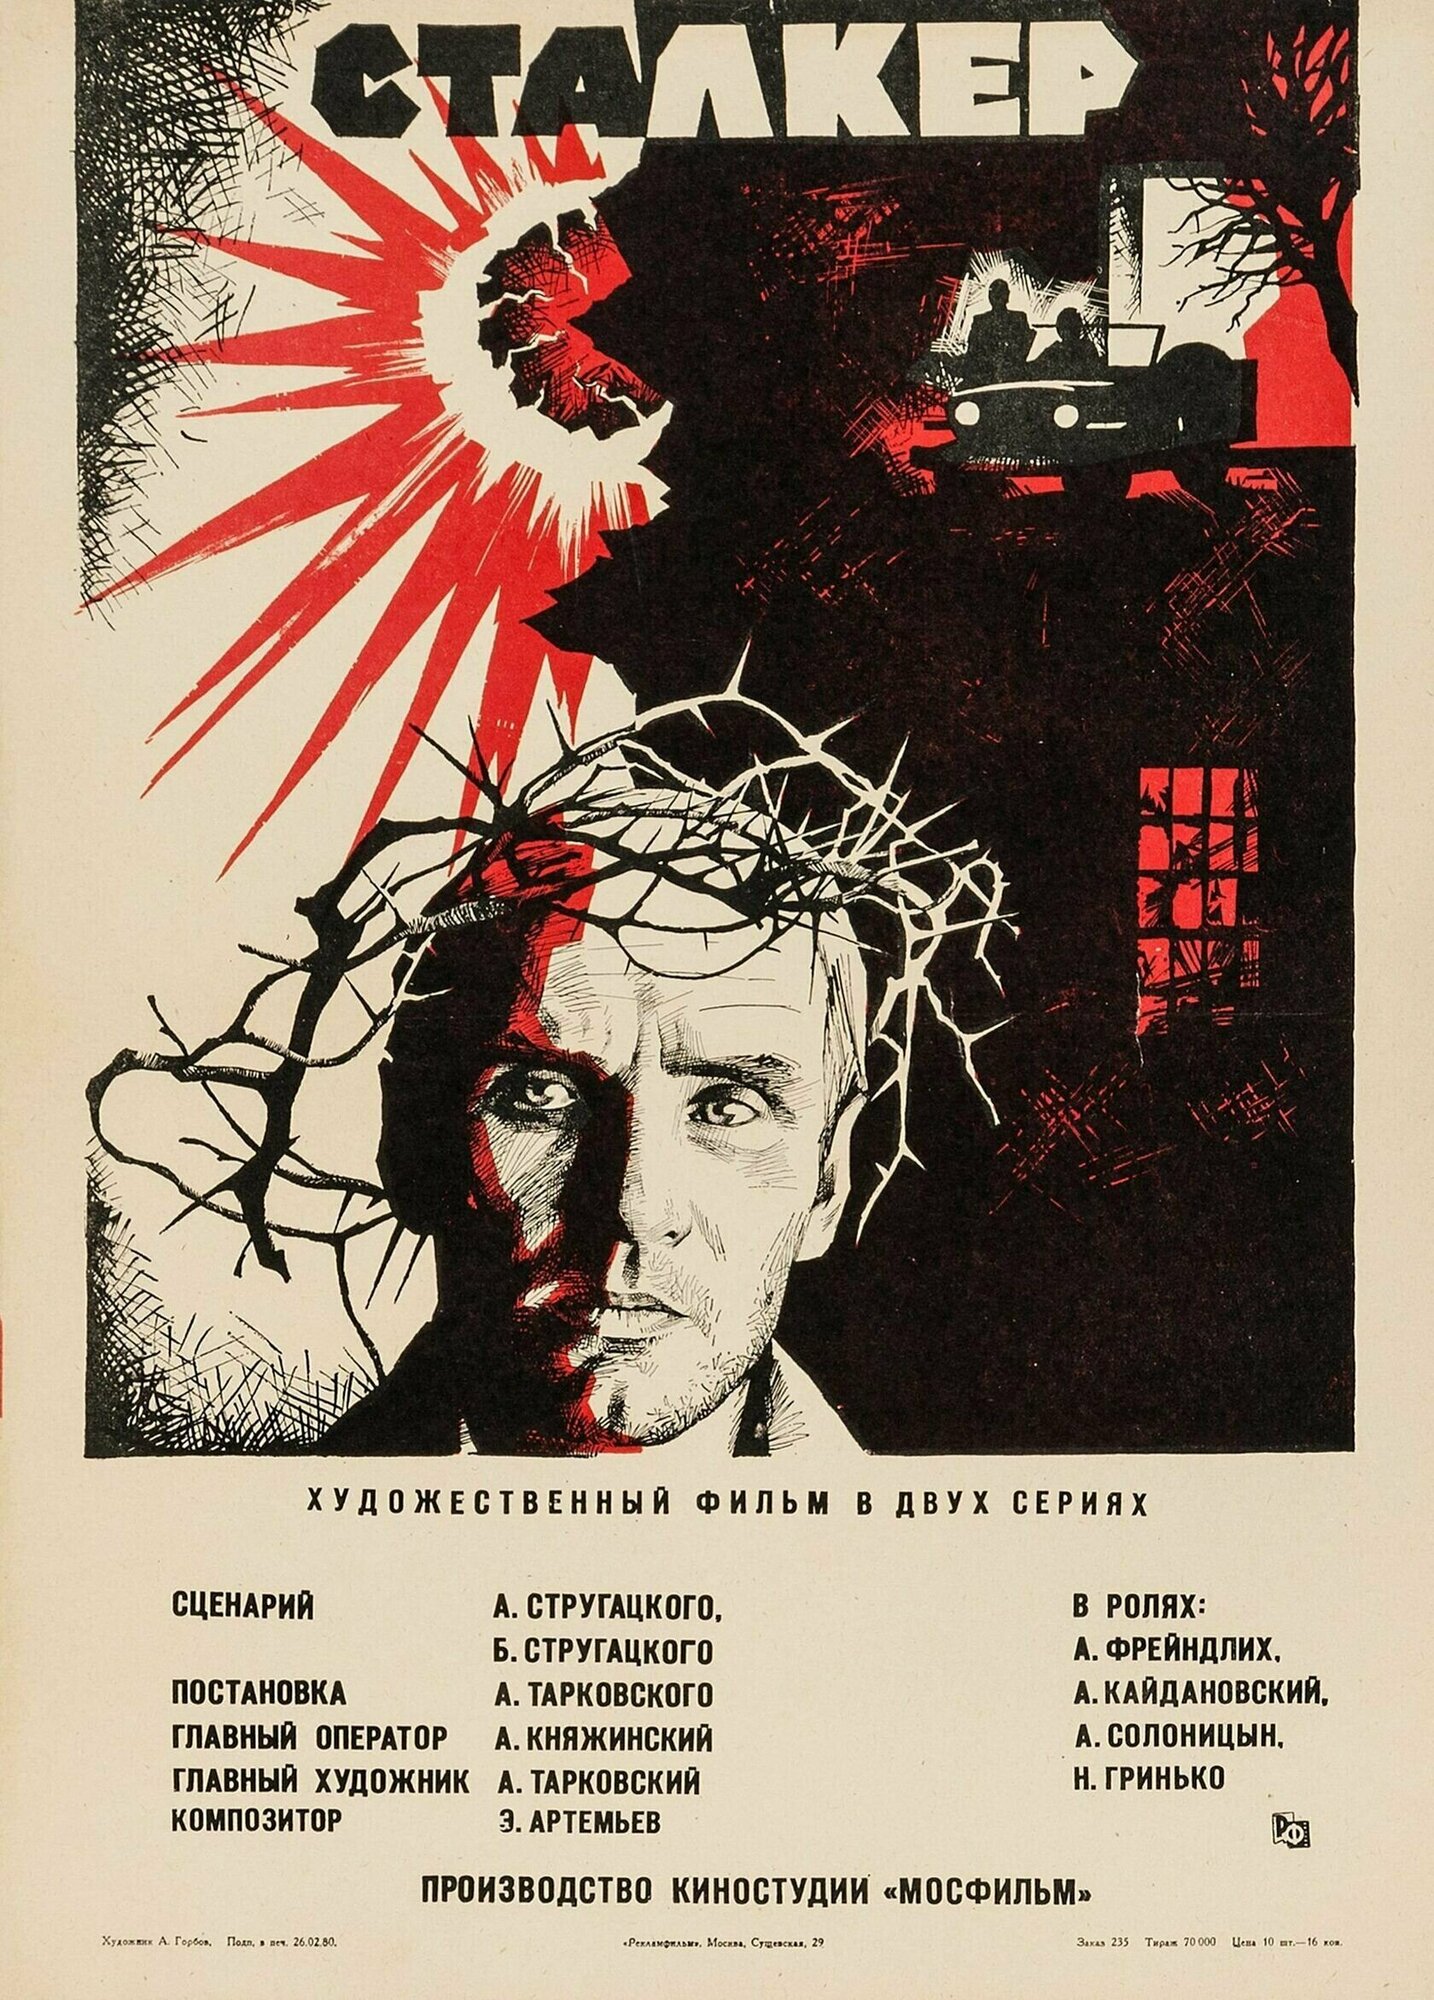 Плакат, постер на бумаге Сталкер (1979г.). Размер 21 на 30 см